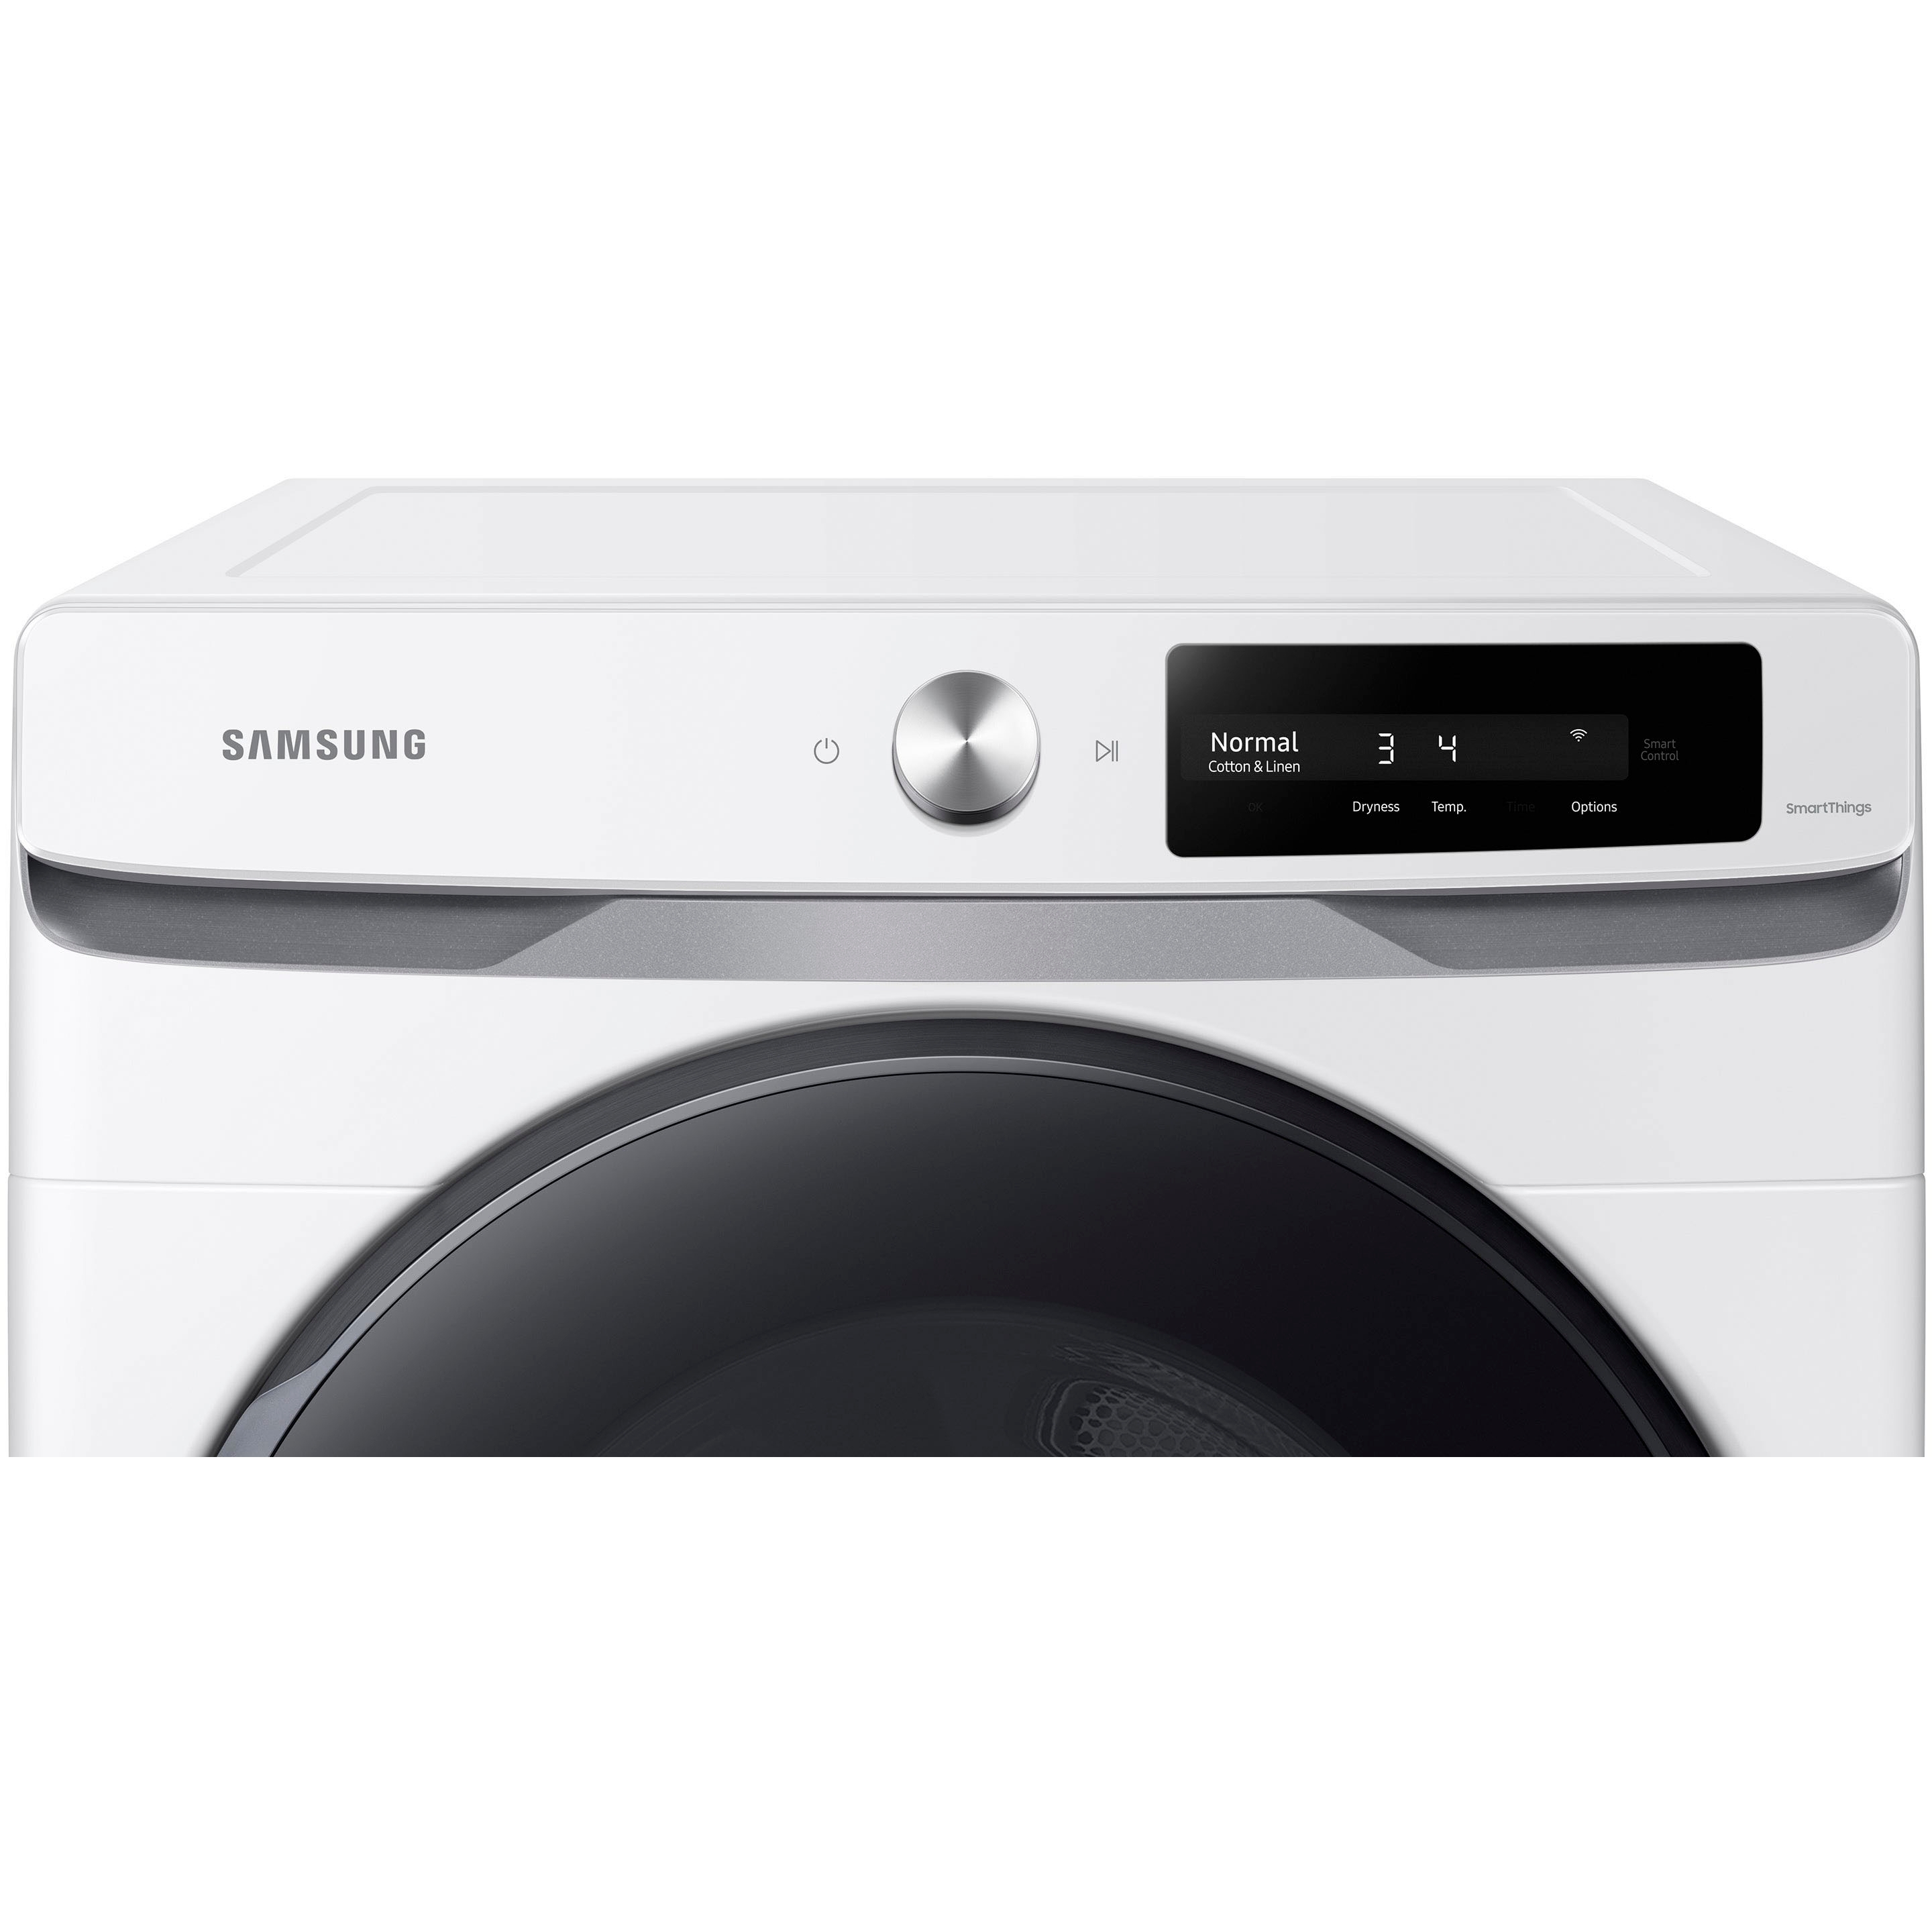 Samsung Dryer Model OBX DVG45A6400W-A3